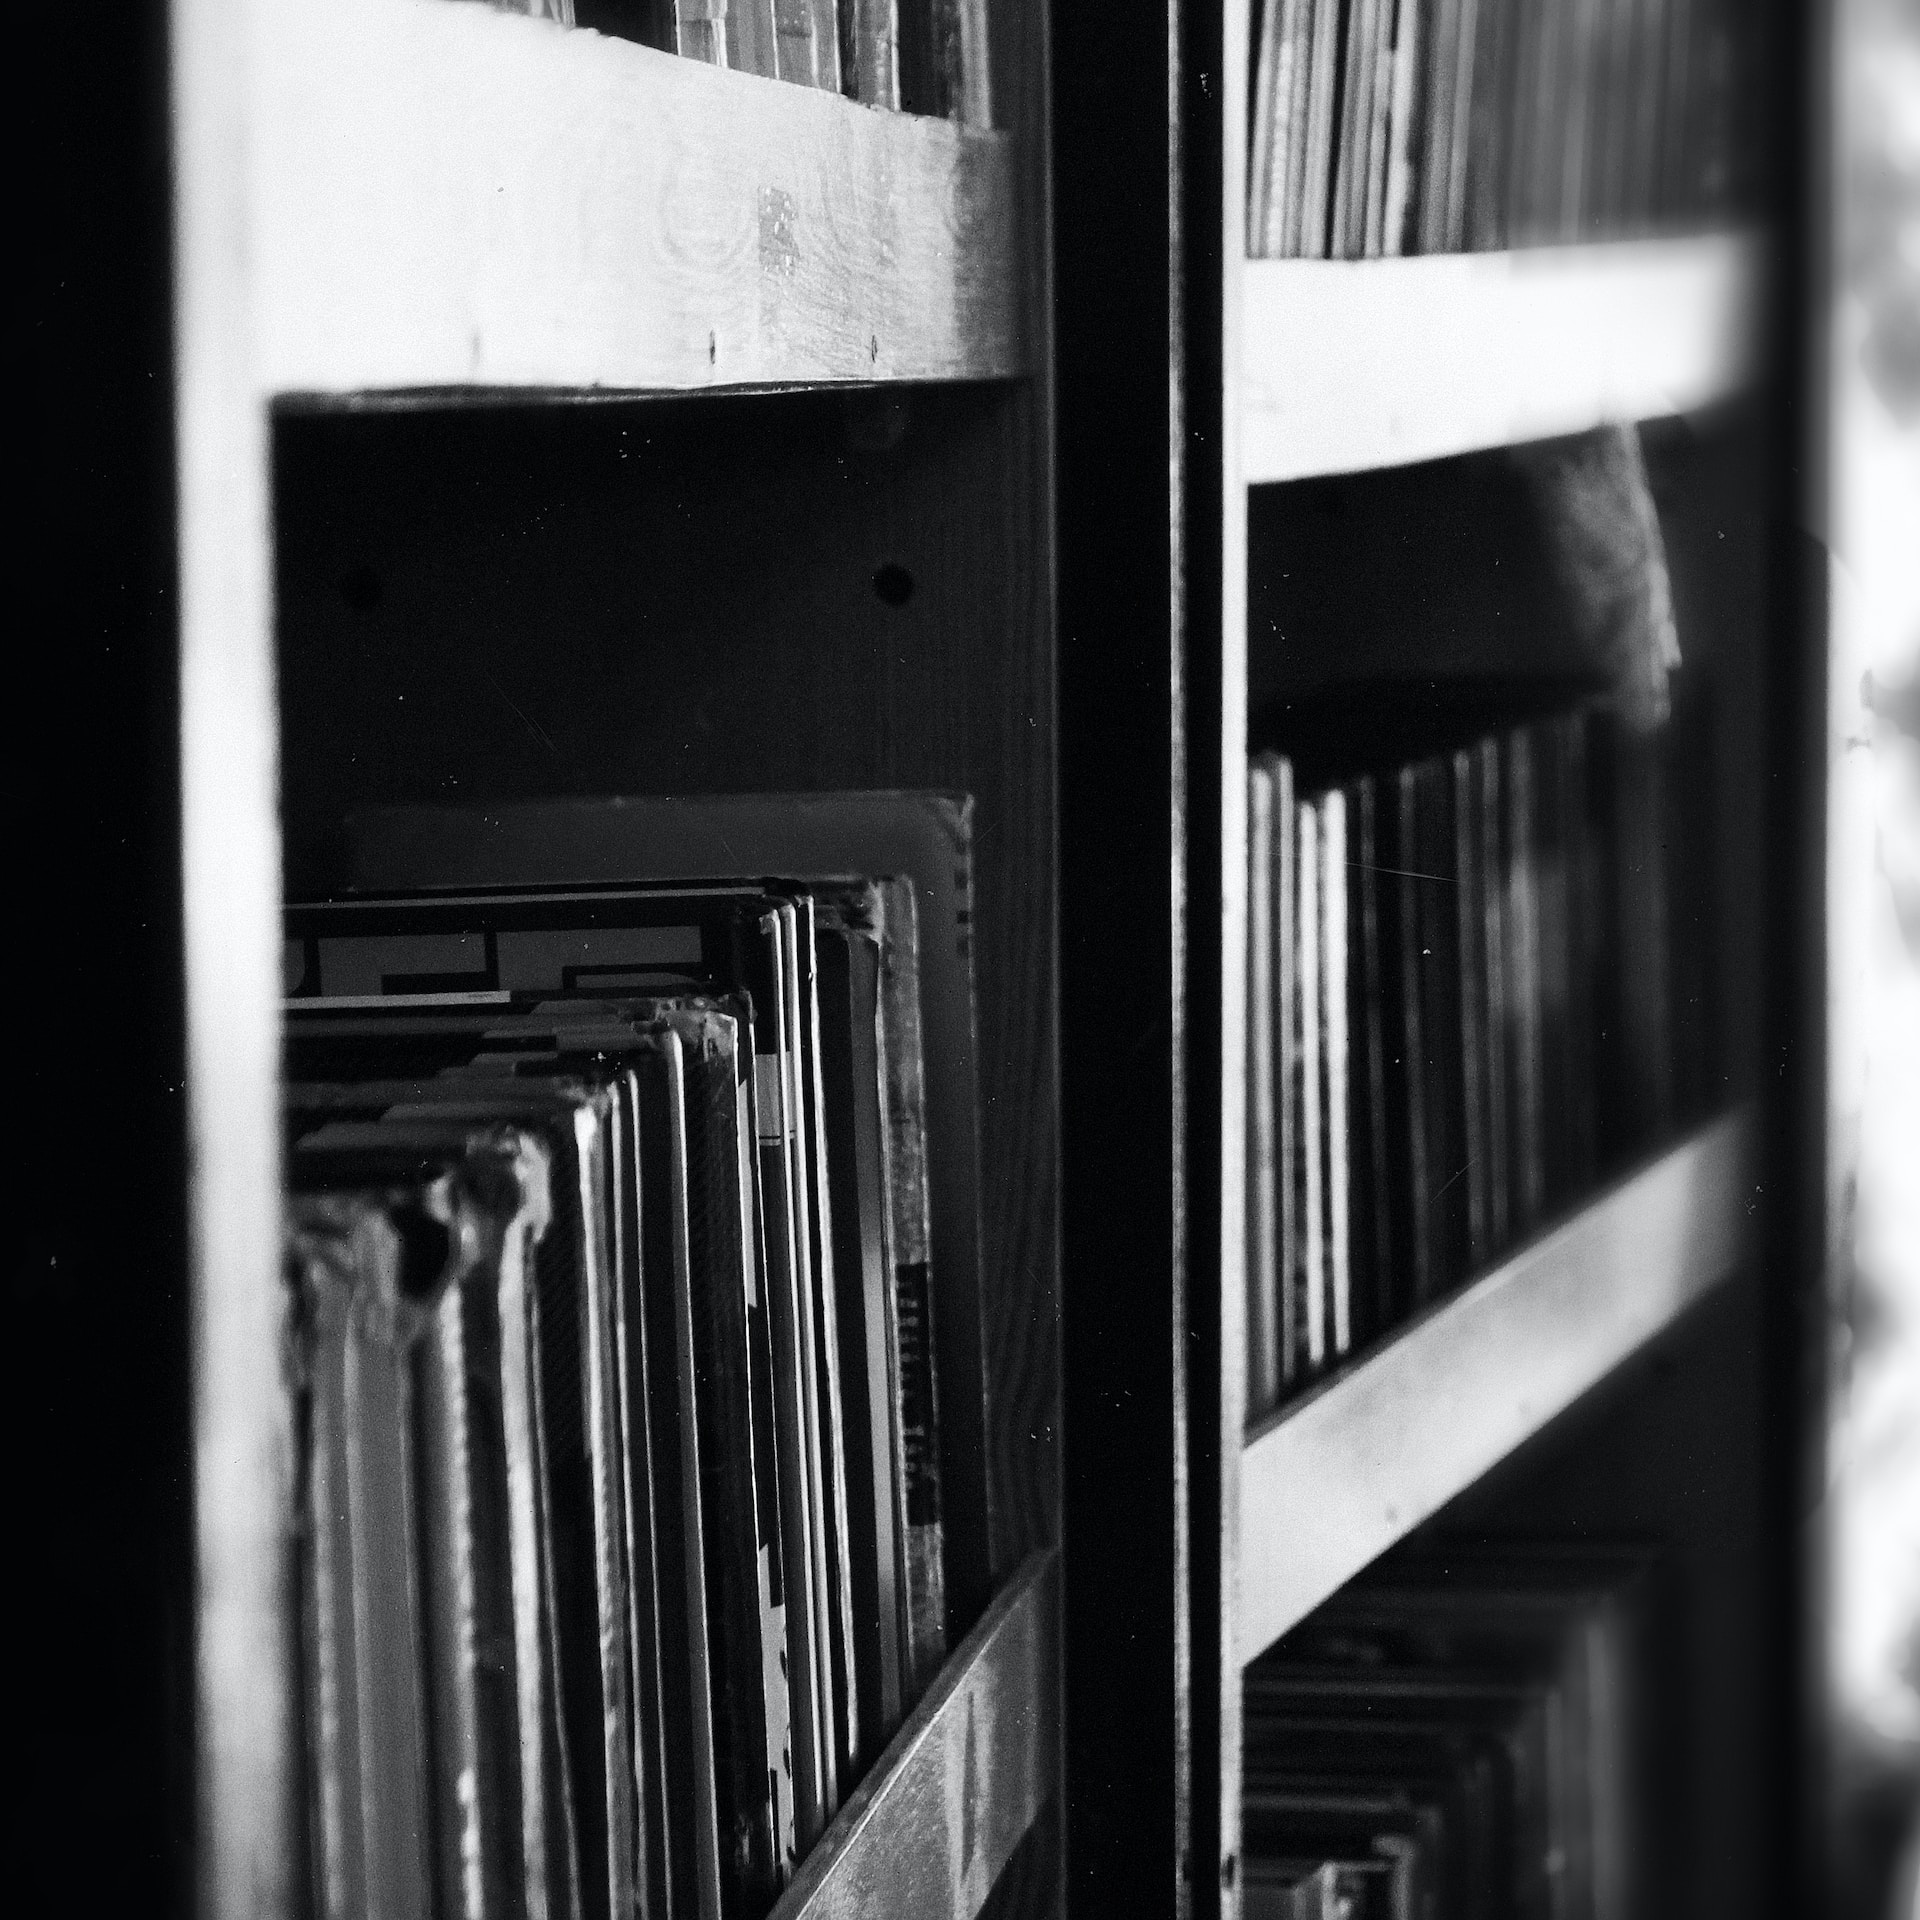 Bookshelf in greyscale
